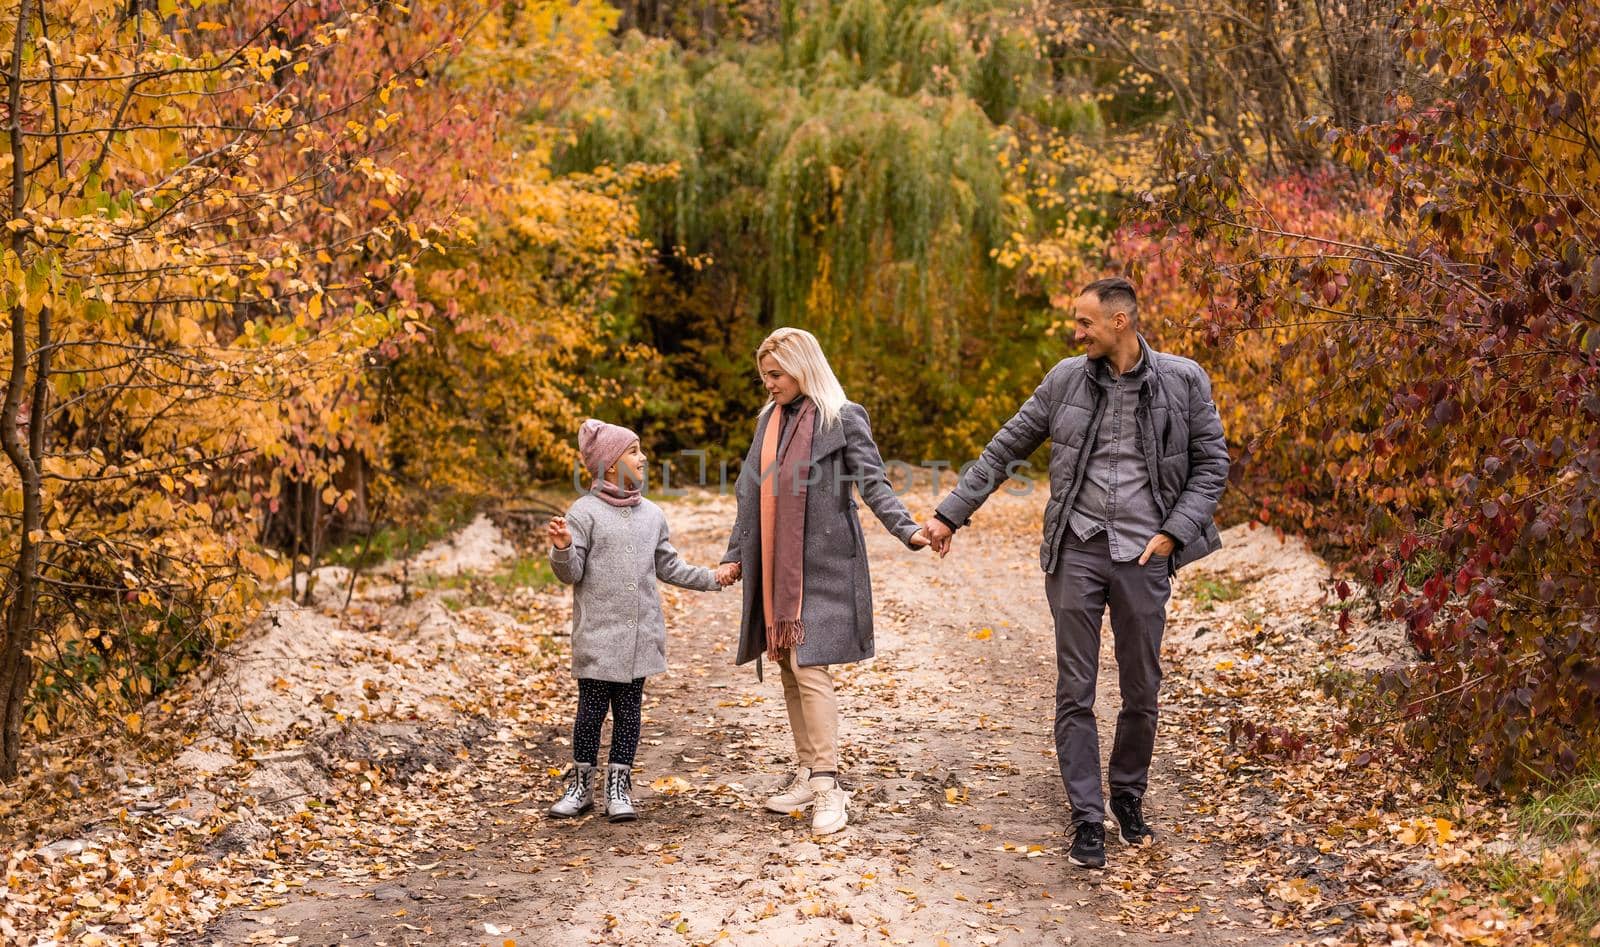 A Family of four enjoying golden leaves in autumn park.